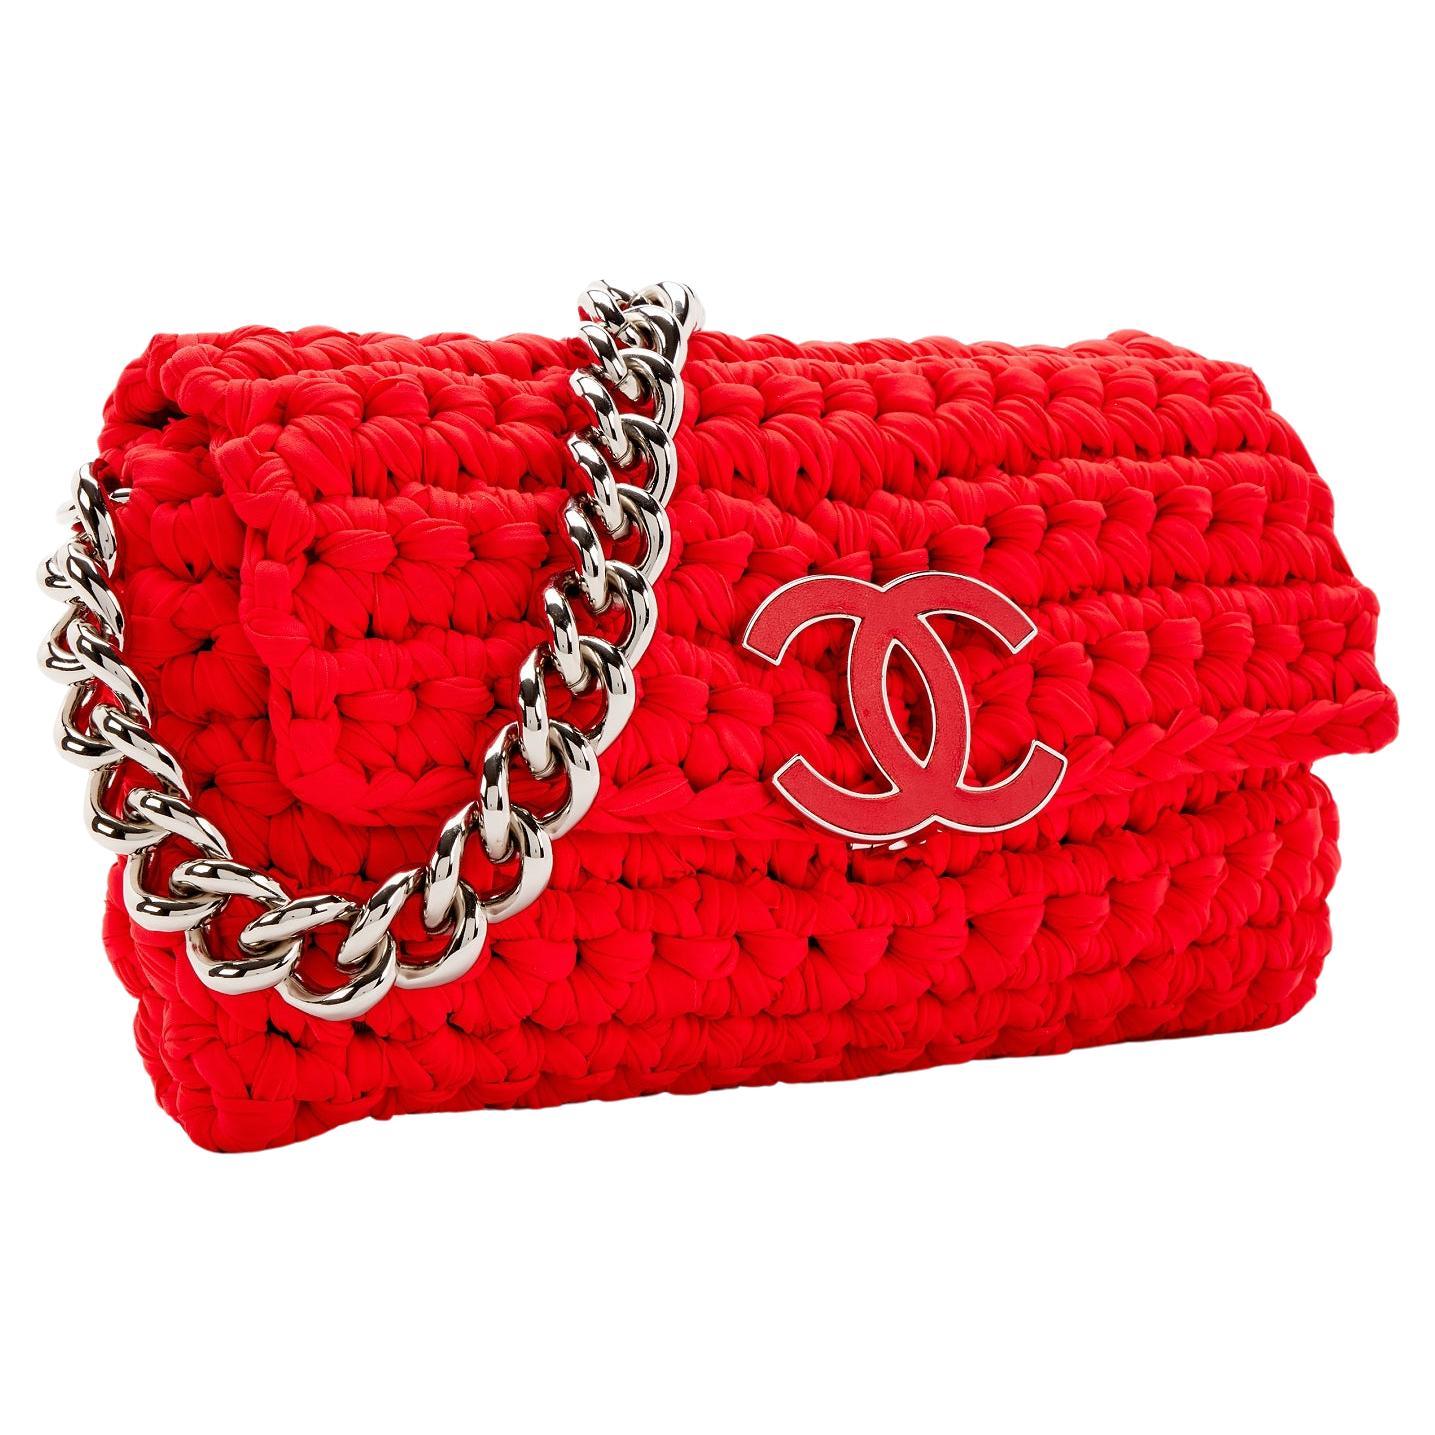 Chanel - Sac à rabat avec logo en crochet - Rouge Cruise